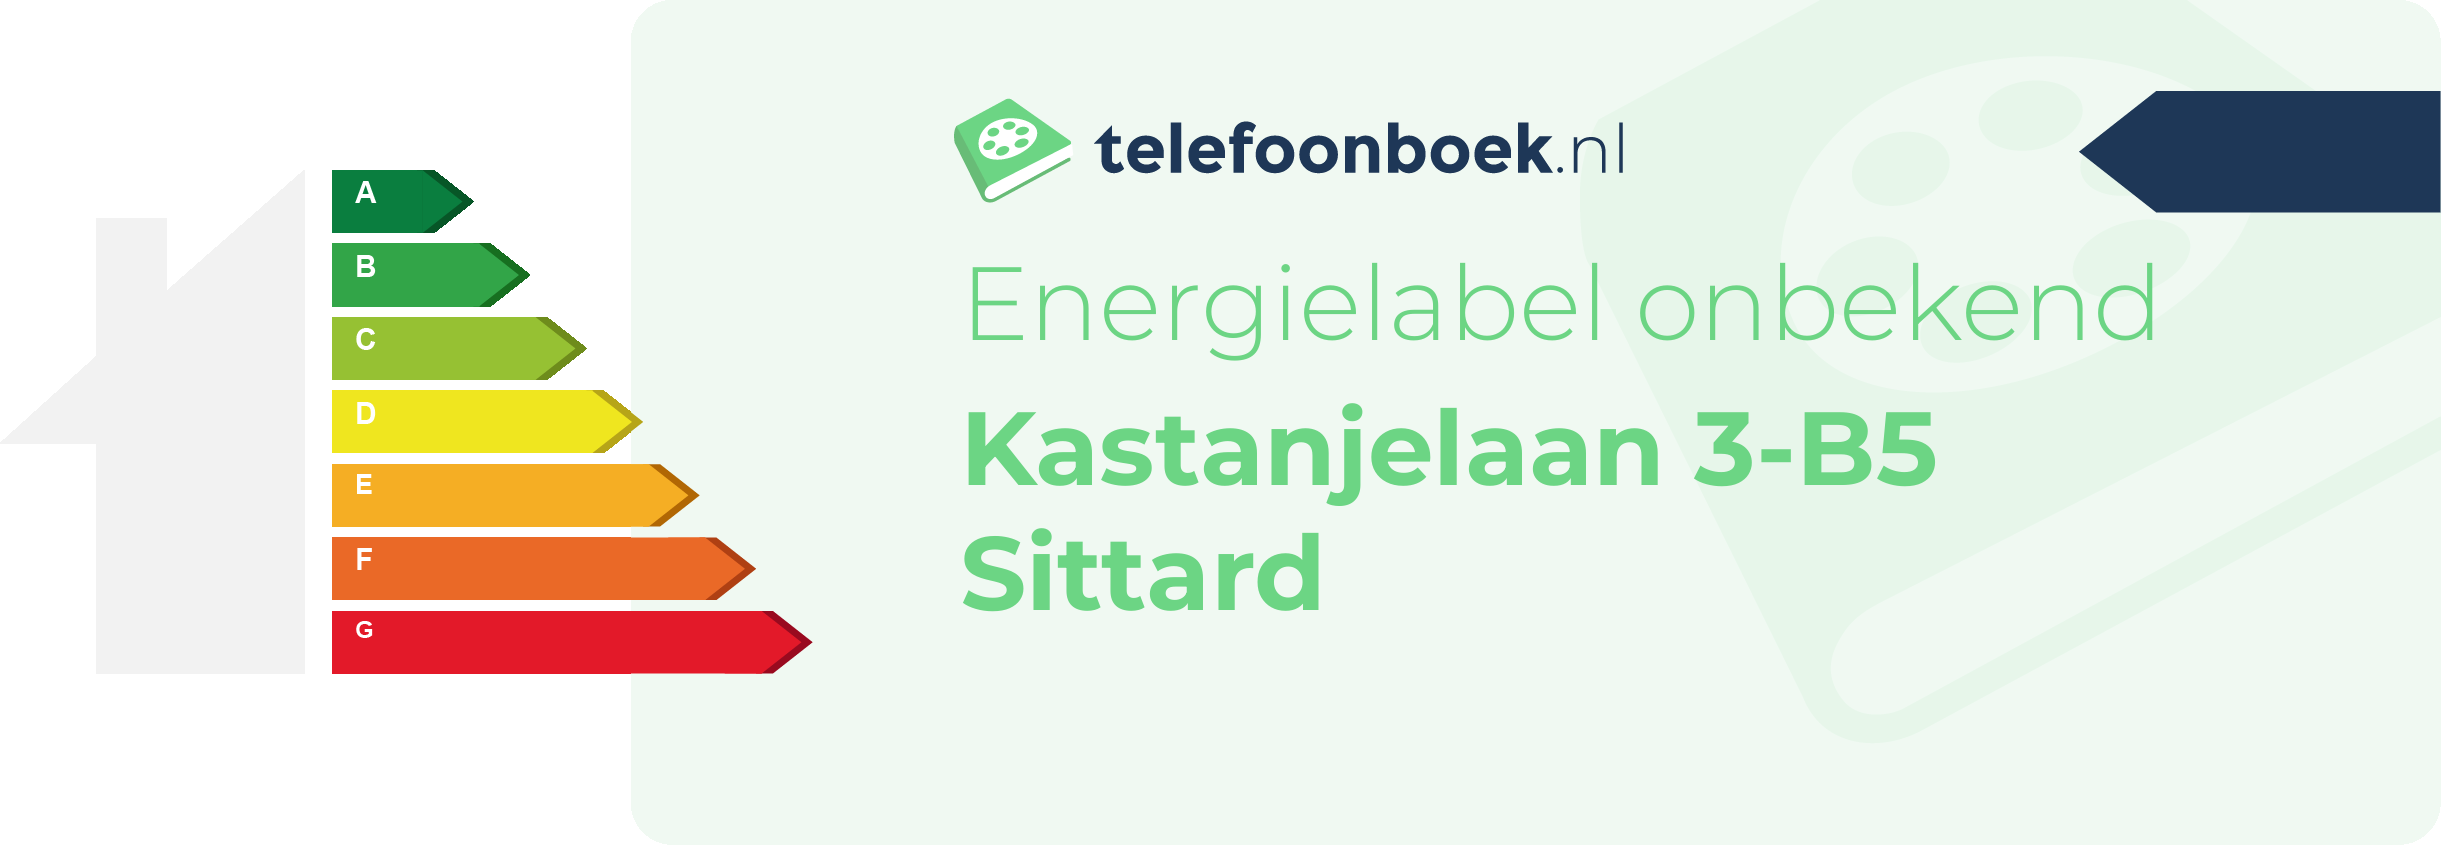 Energielabel Kastanjelaan 3-B5 Sittard